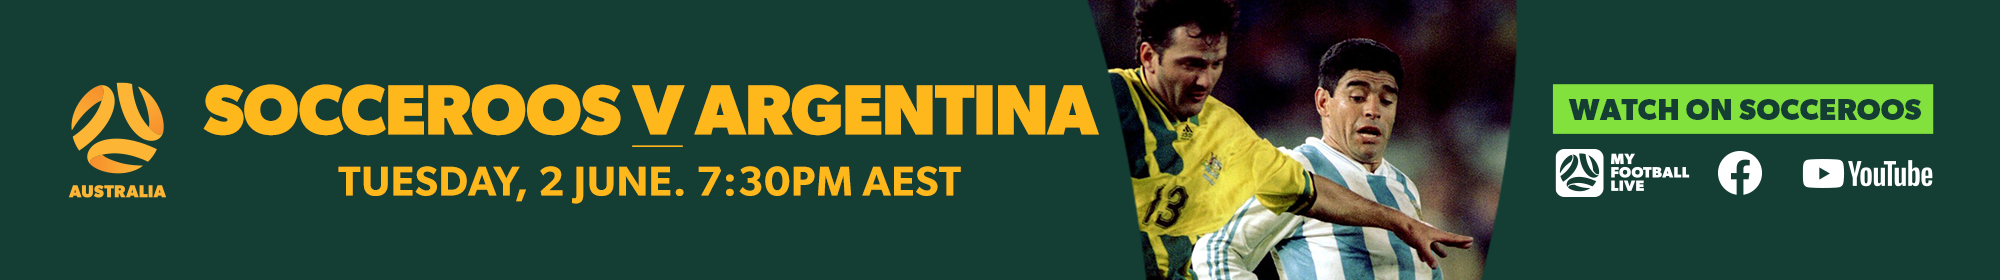 Socceroos Australia v Argentina Thin Banner